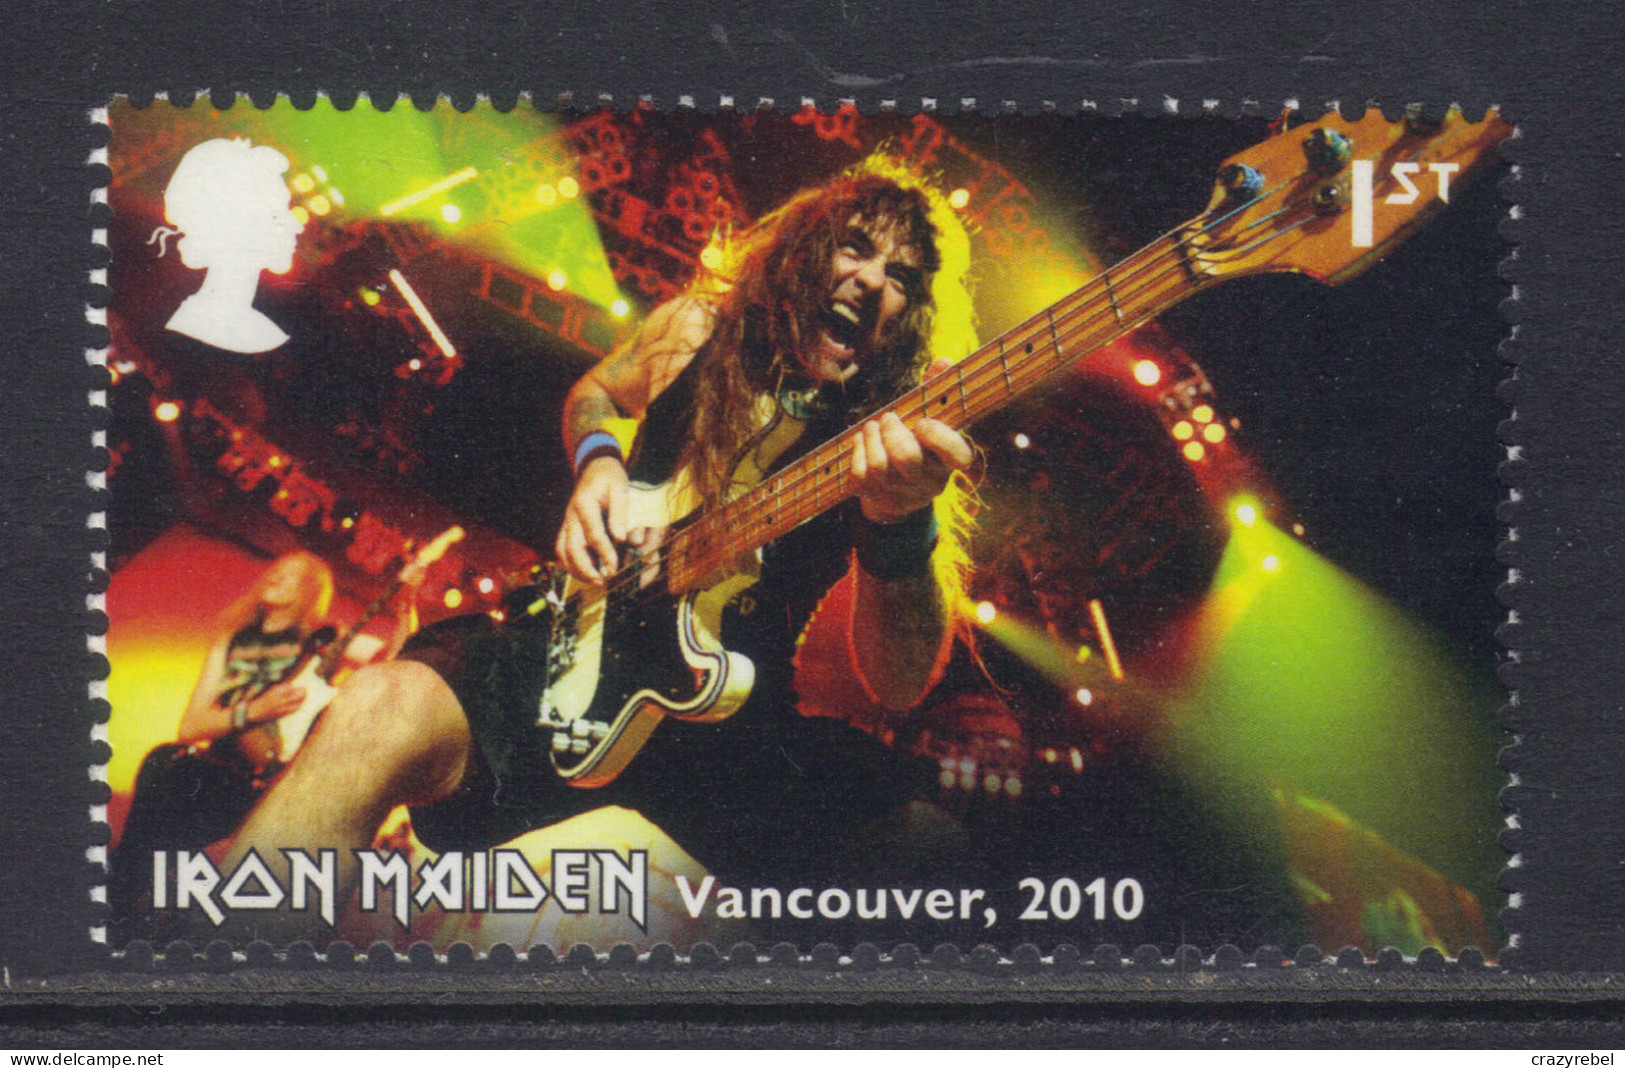 GB 2023 QE2 1st Iron Maiden Tour Vancouver 2010 Umm ( H787 ) - Neufs